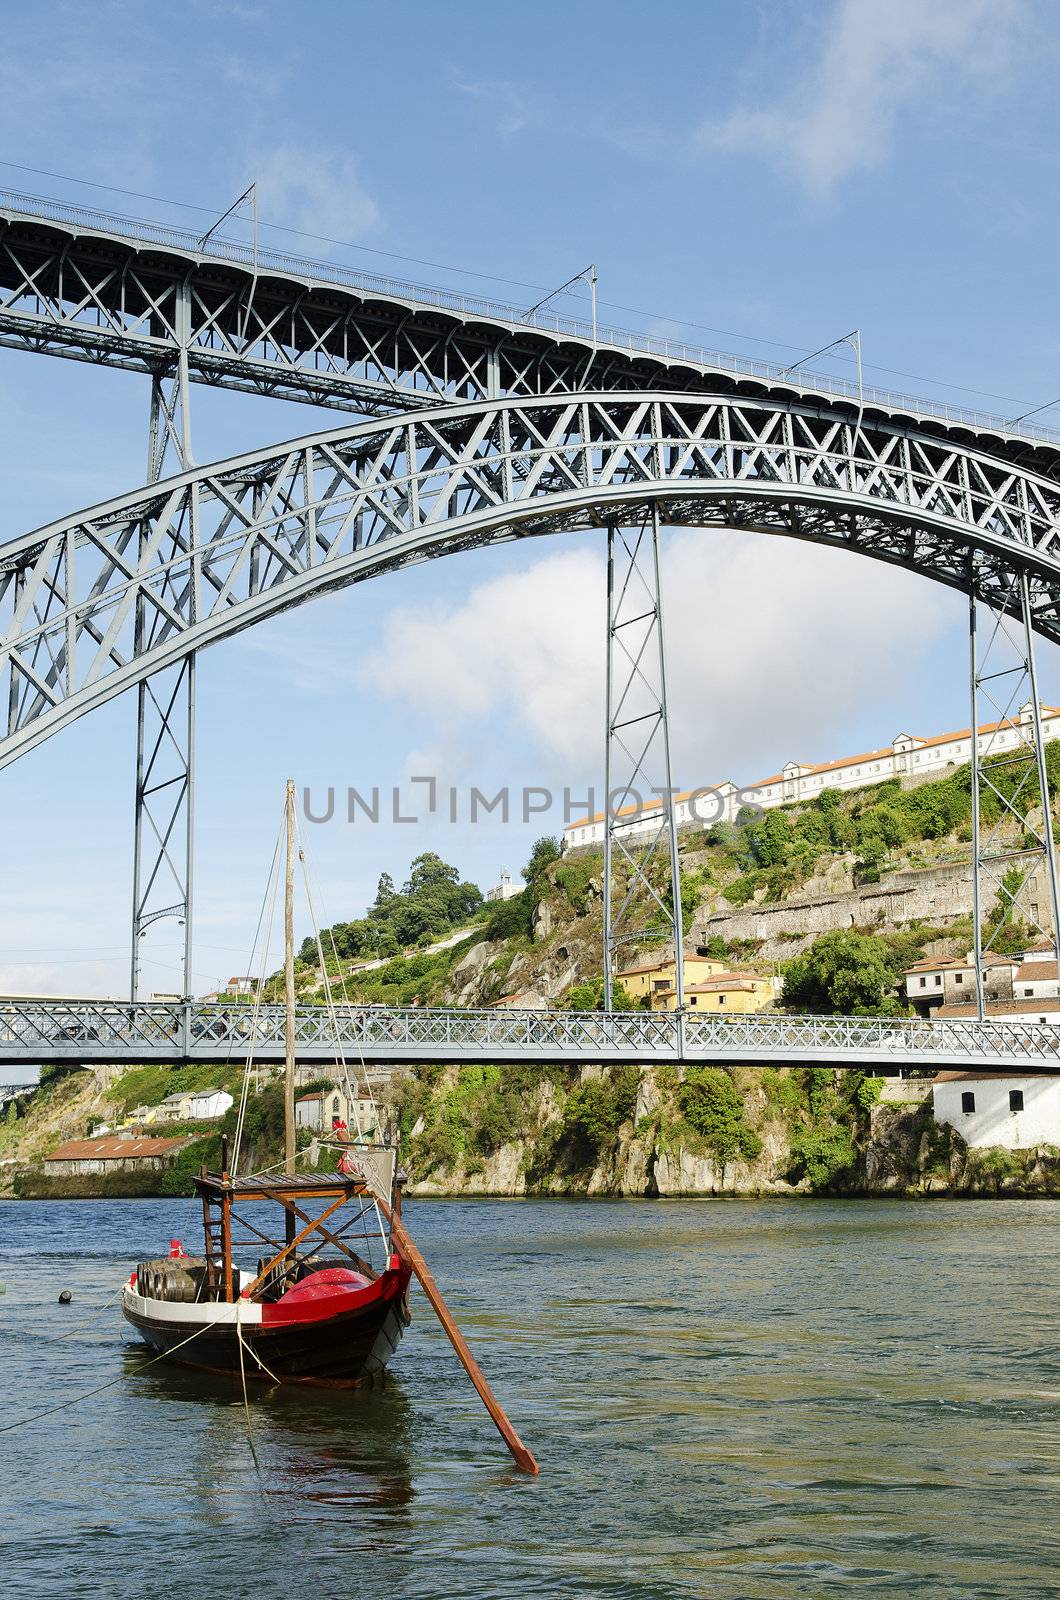 dom luis bridge in porto portugal by jackmalipan